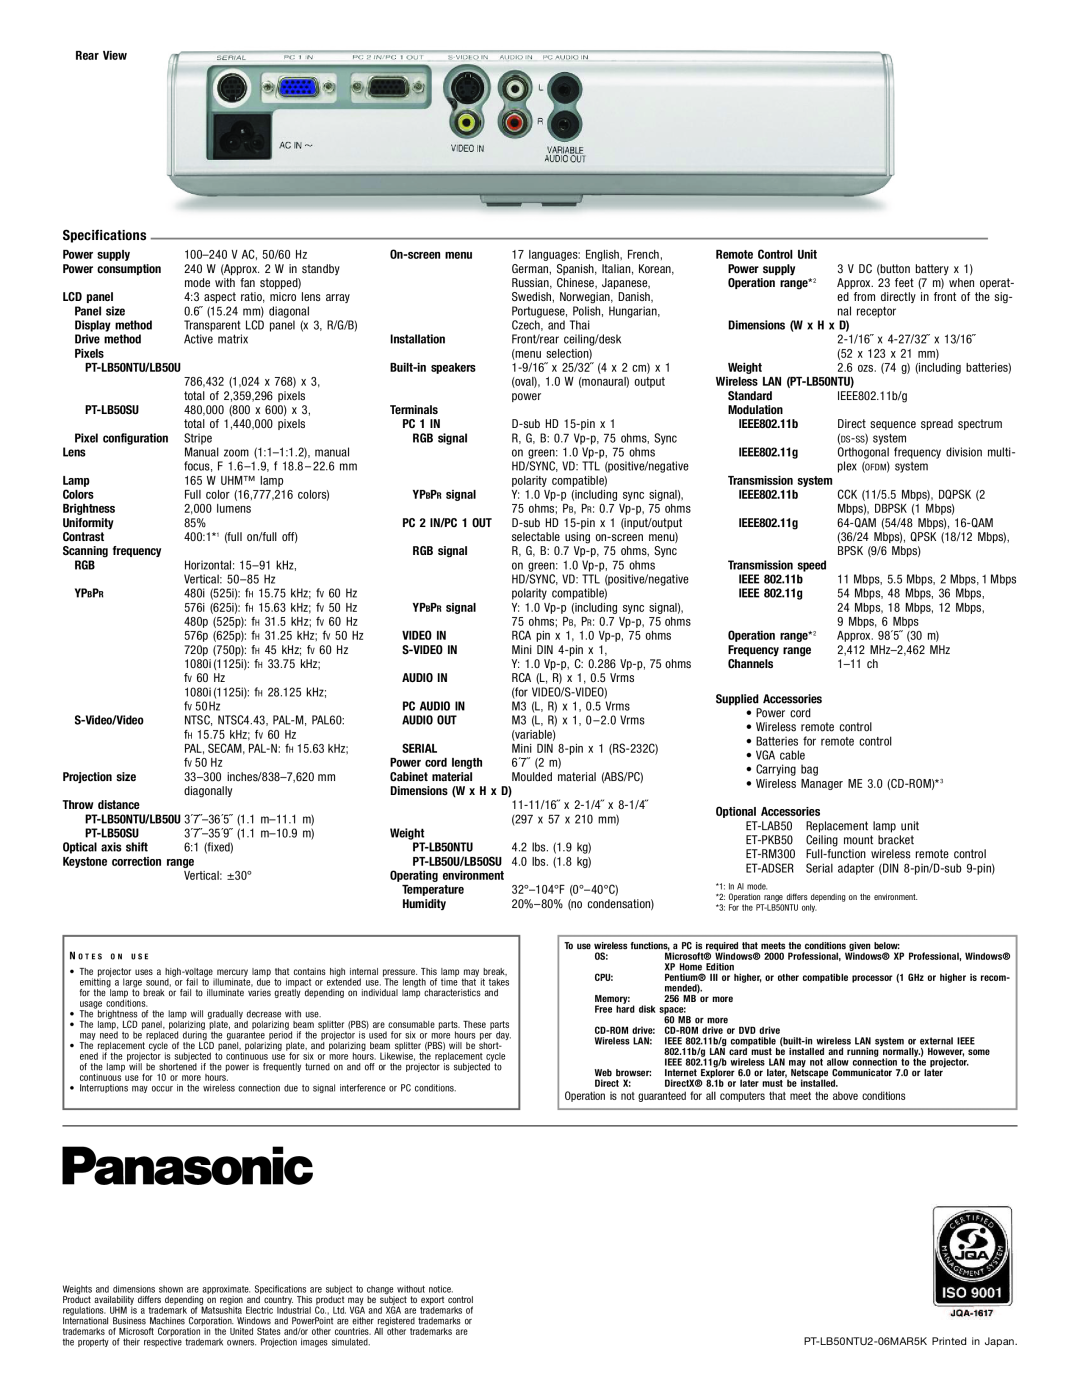 Panasonic PT-LB50NTU manual Specifications, PT-LB50U/LB50SU, Operating environment, Transmission system, Transmission speed 